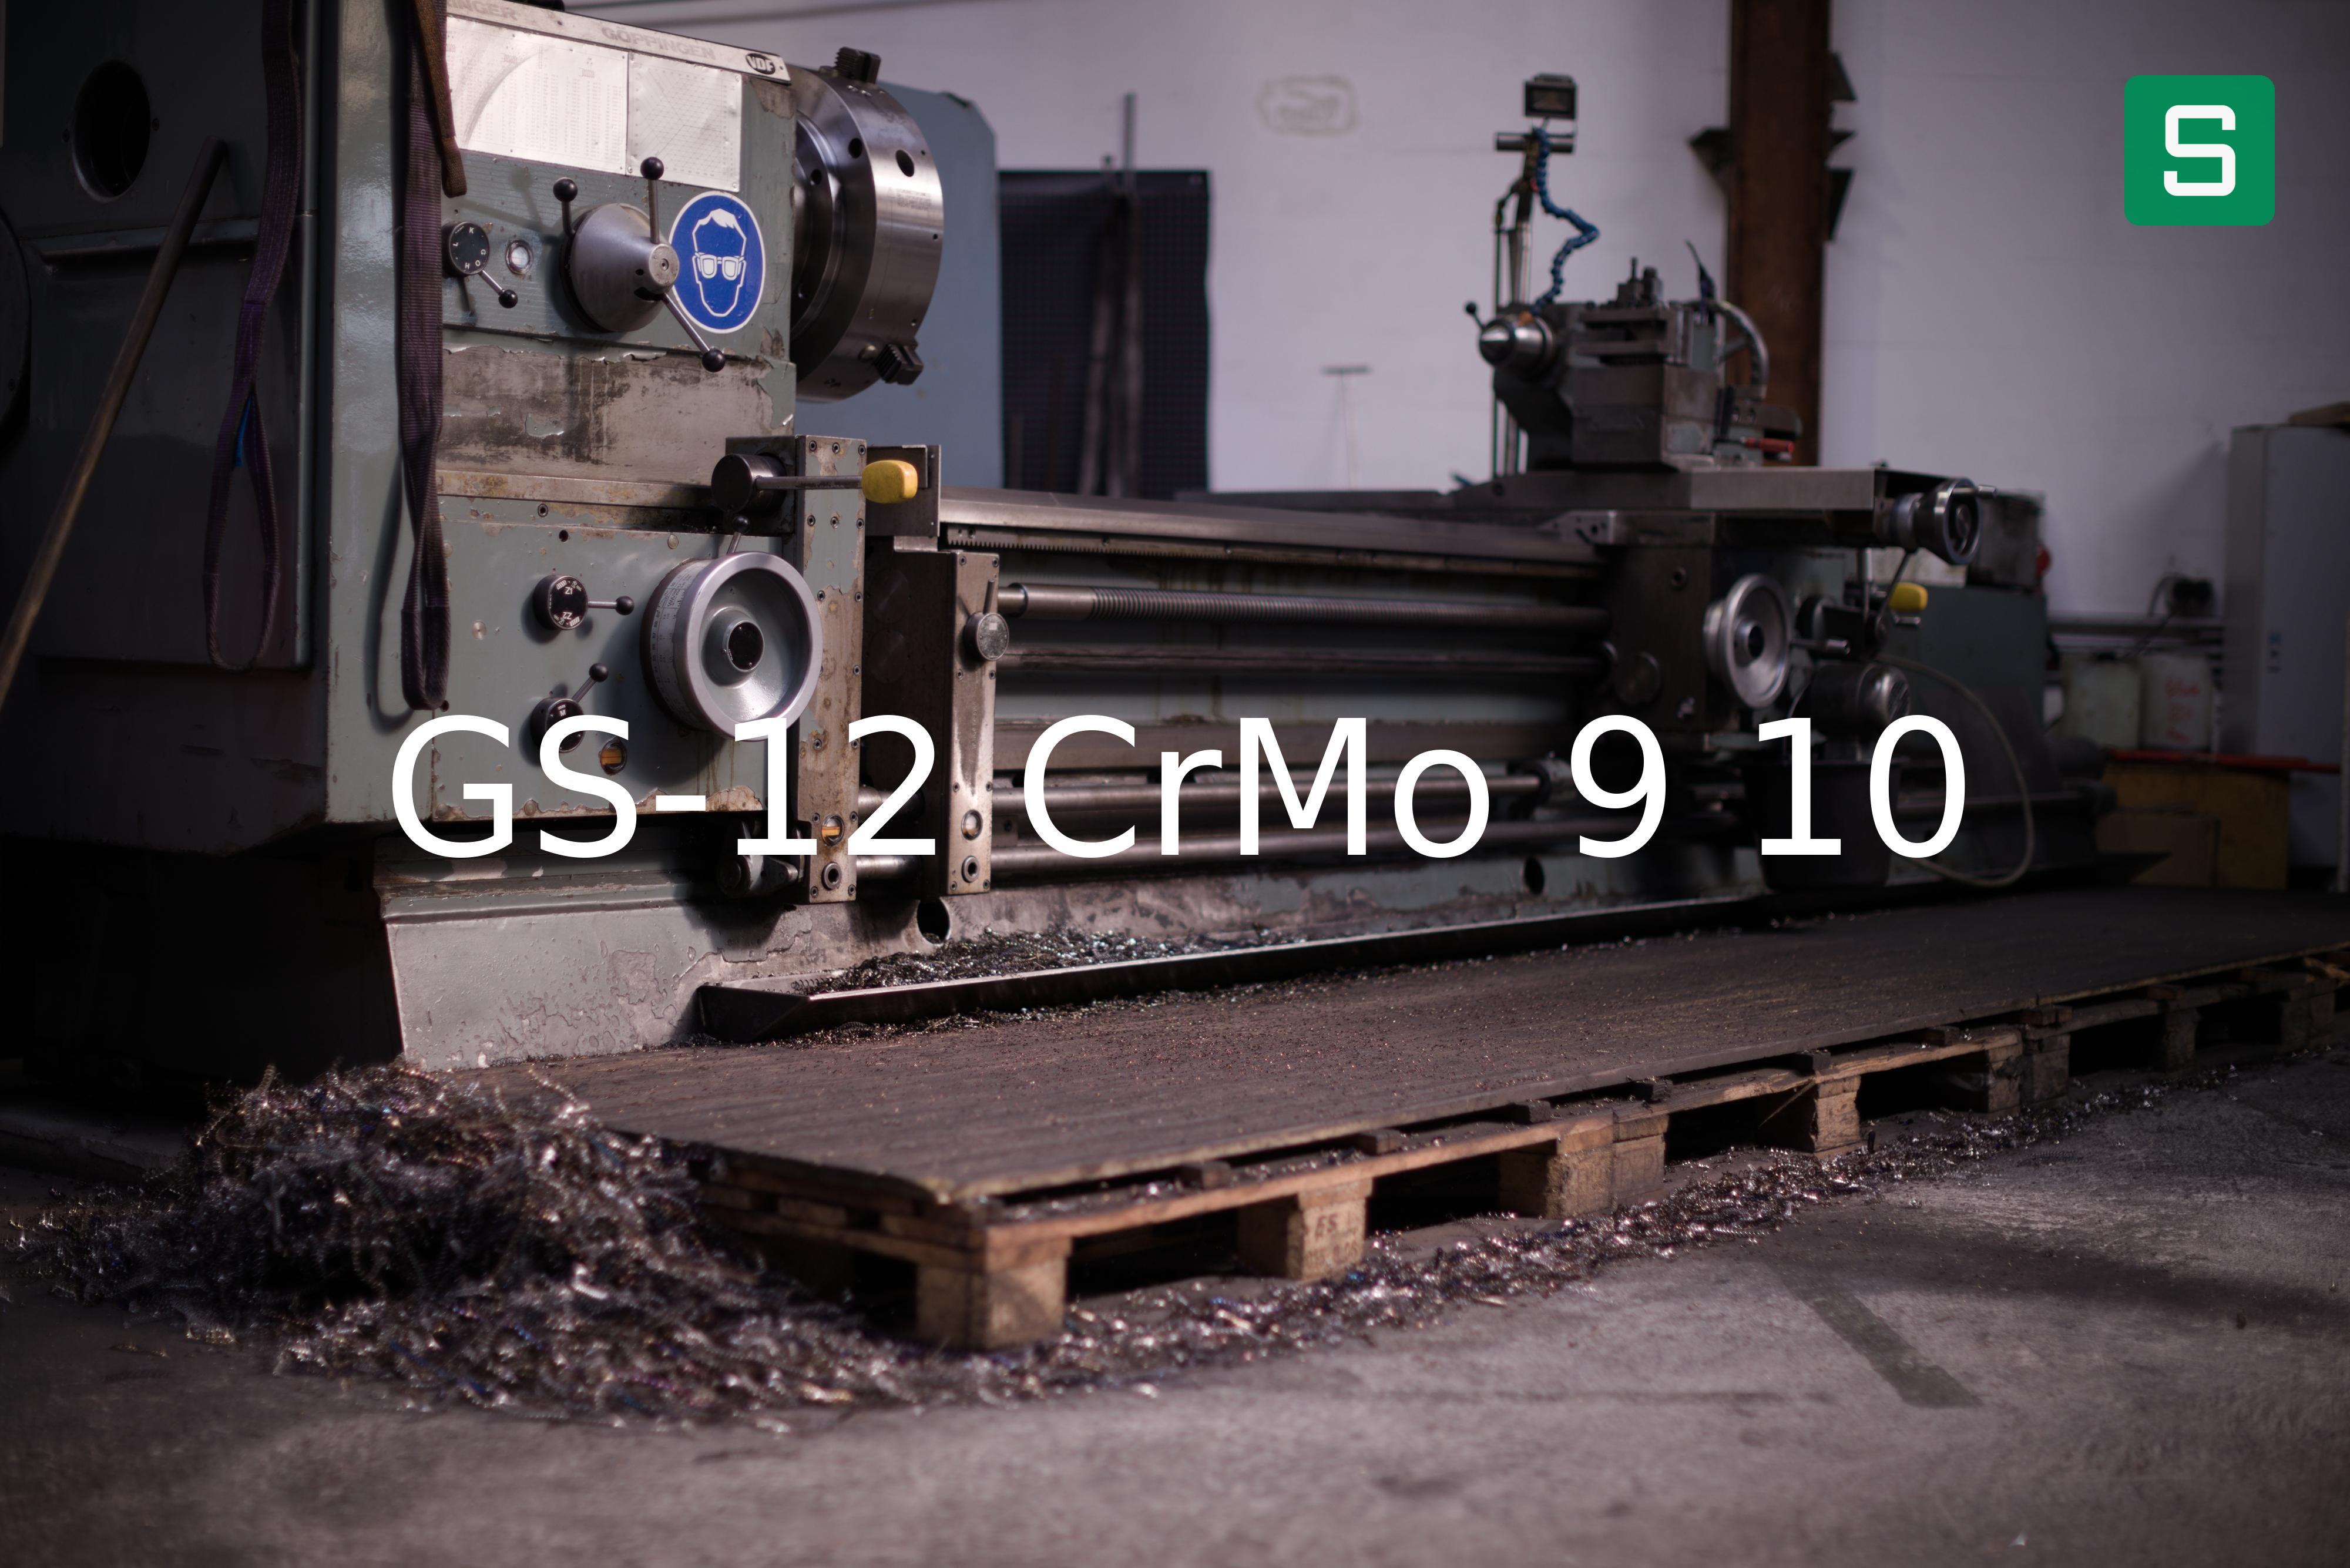 Steel Material: GS-12 CrMo 9 10